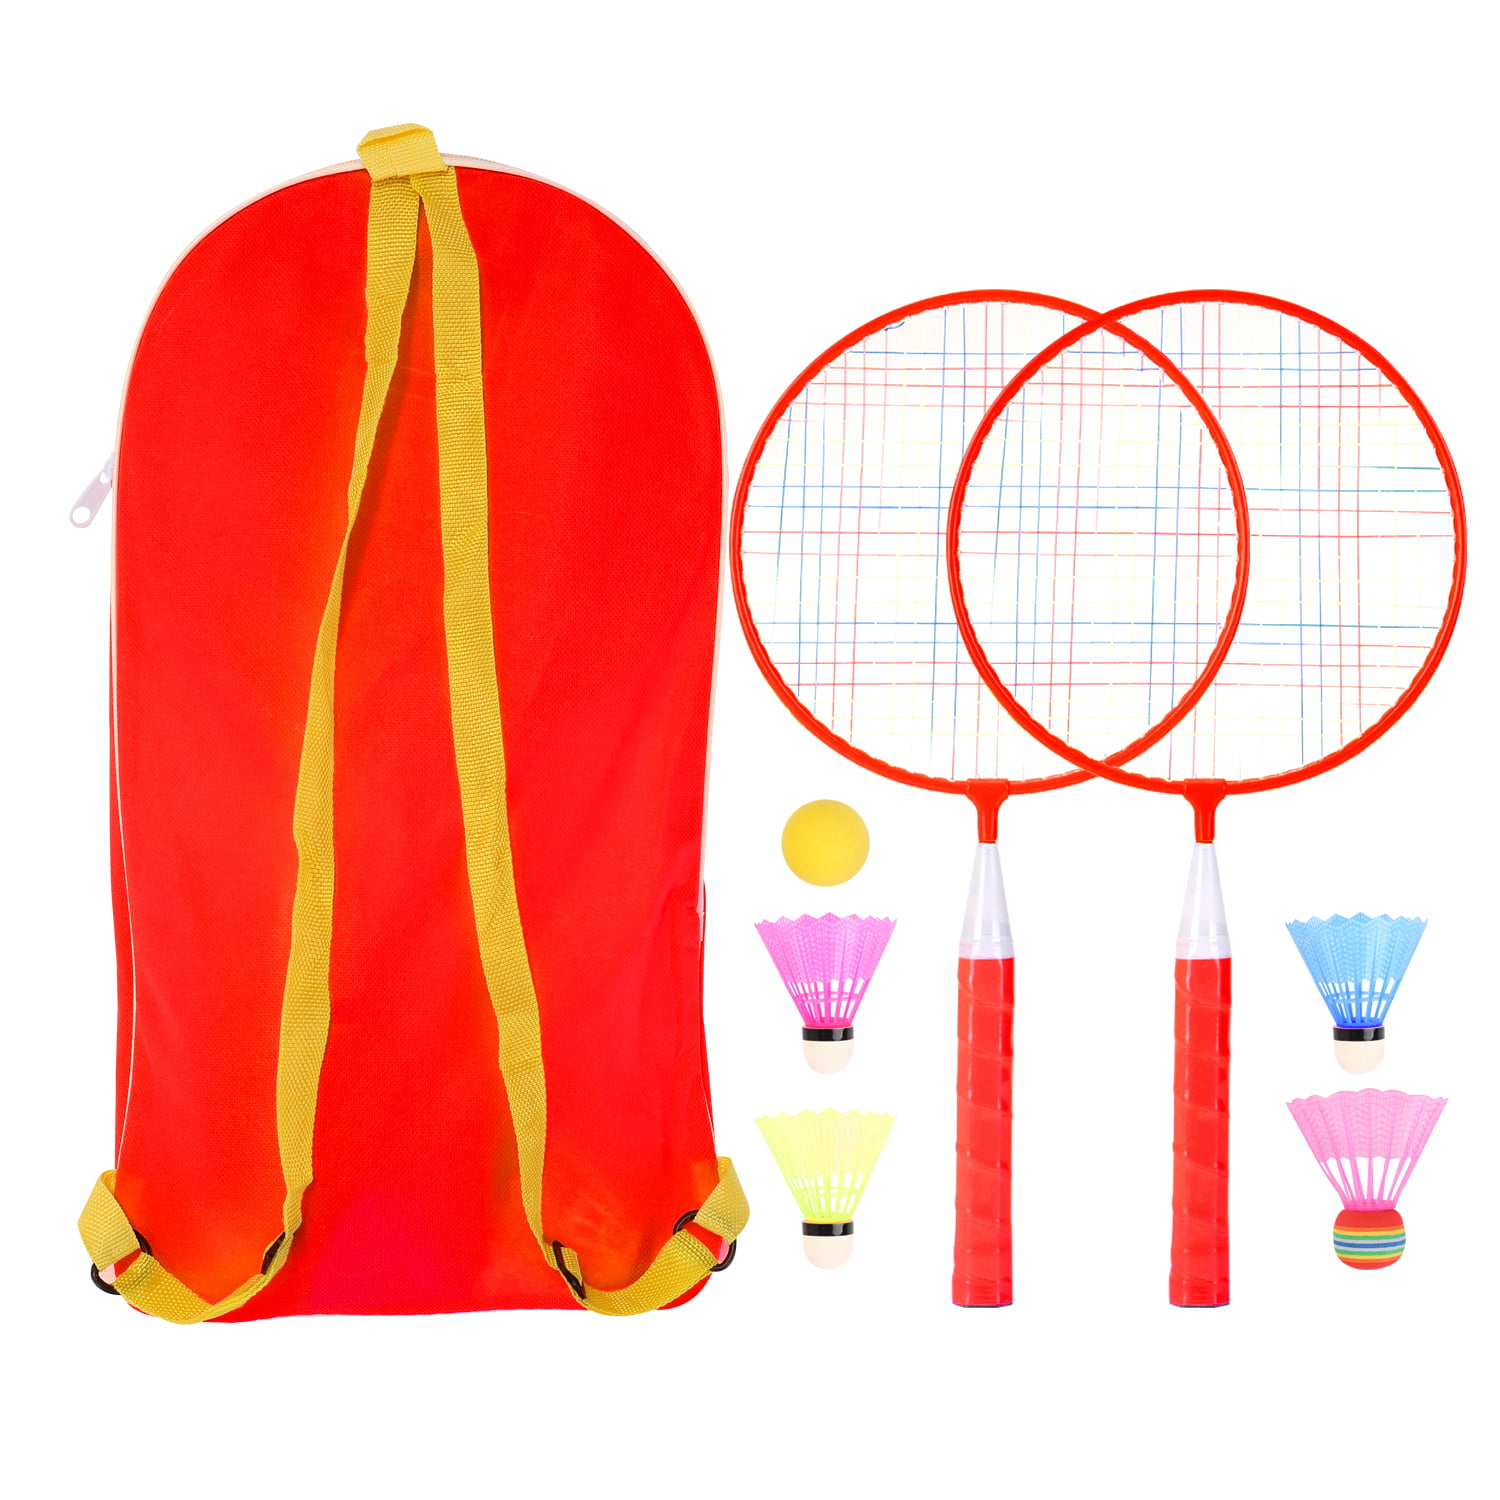 Details about   Durable Nylon Badminton Racket Racquet For Kids Children Training Practice Pink 